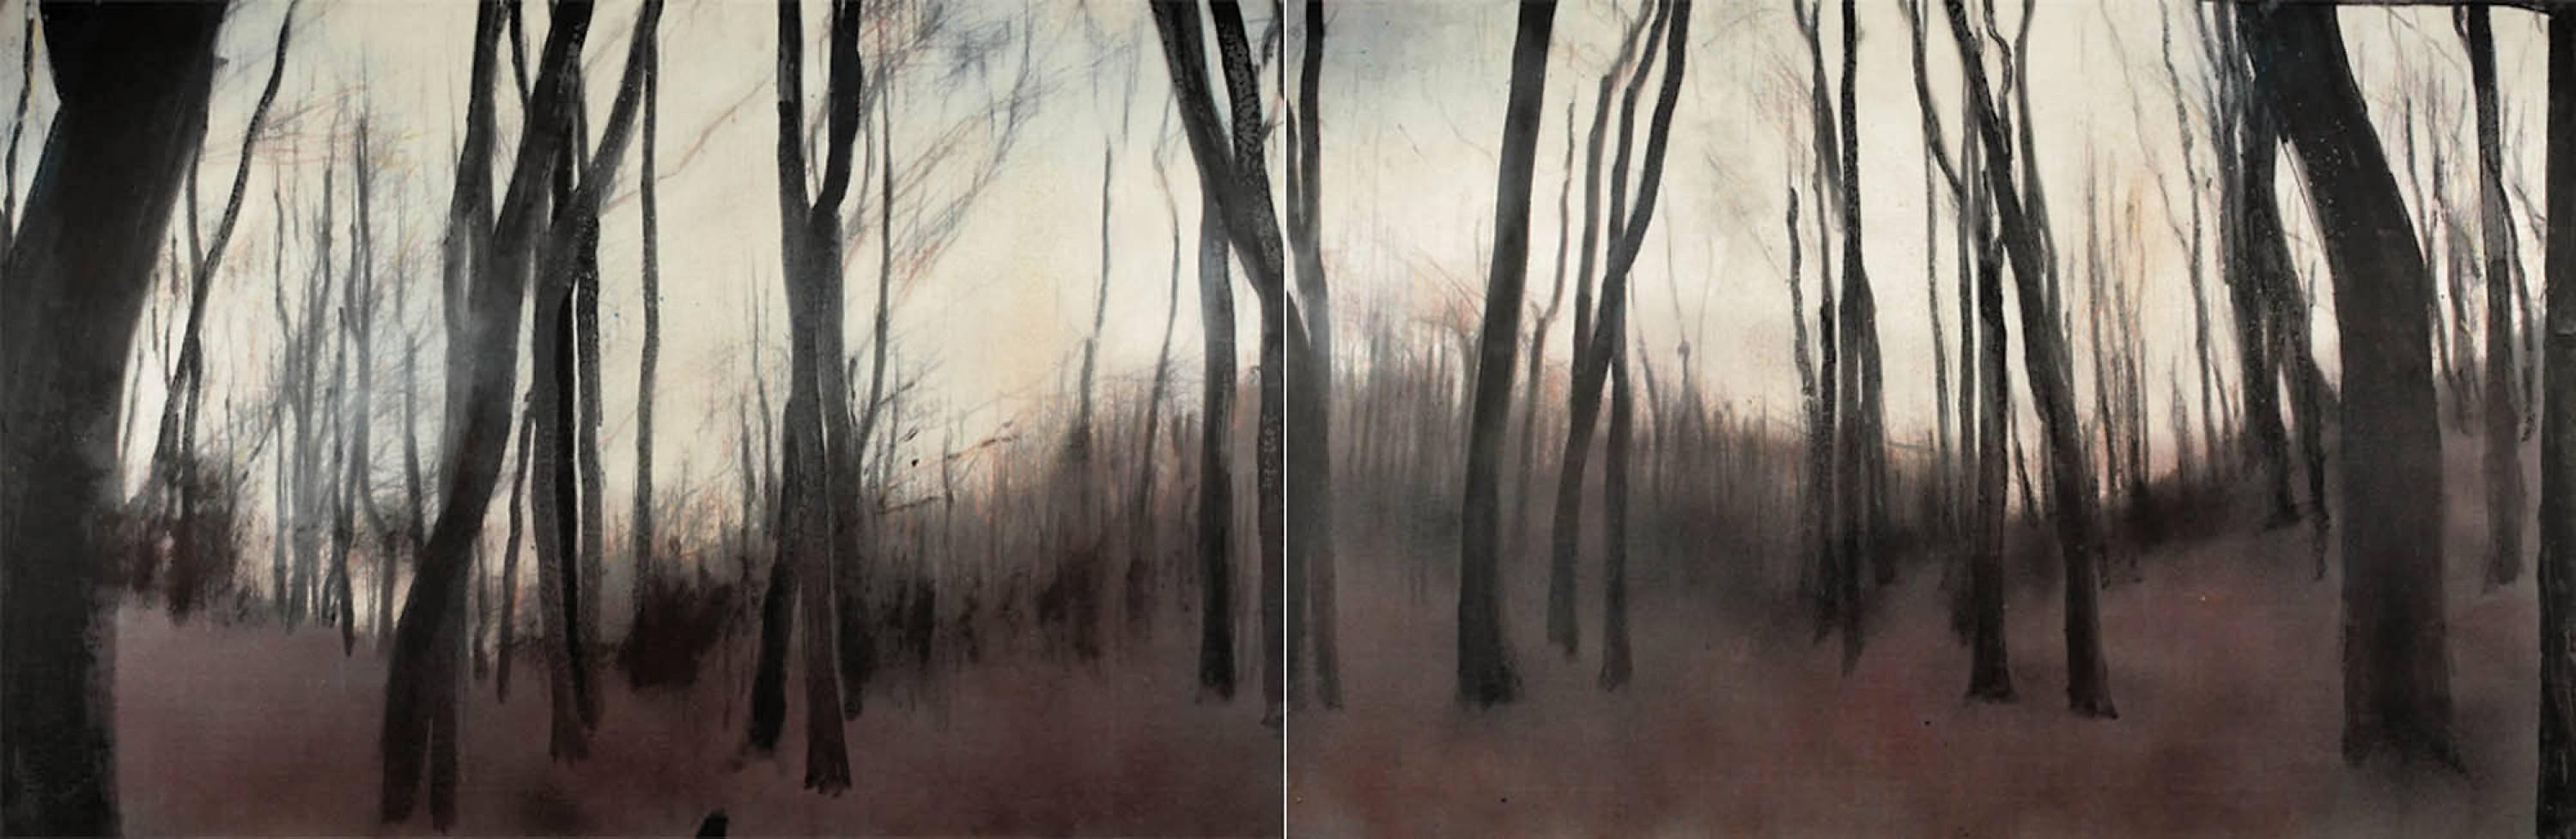 Forêt de cidre V (diptyque) - Contemporary, Landscape, Beige, Brown, Trees, Nature